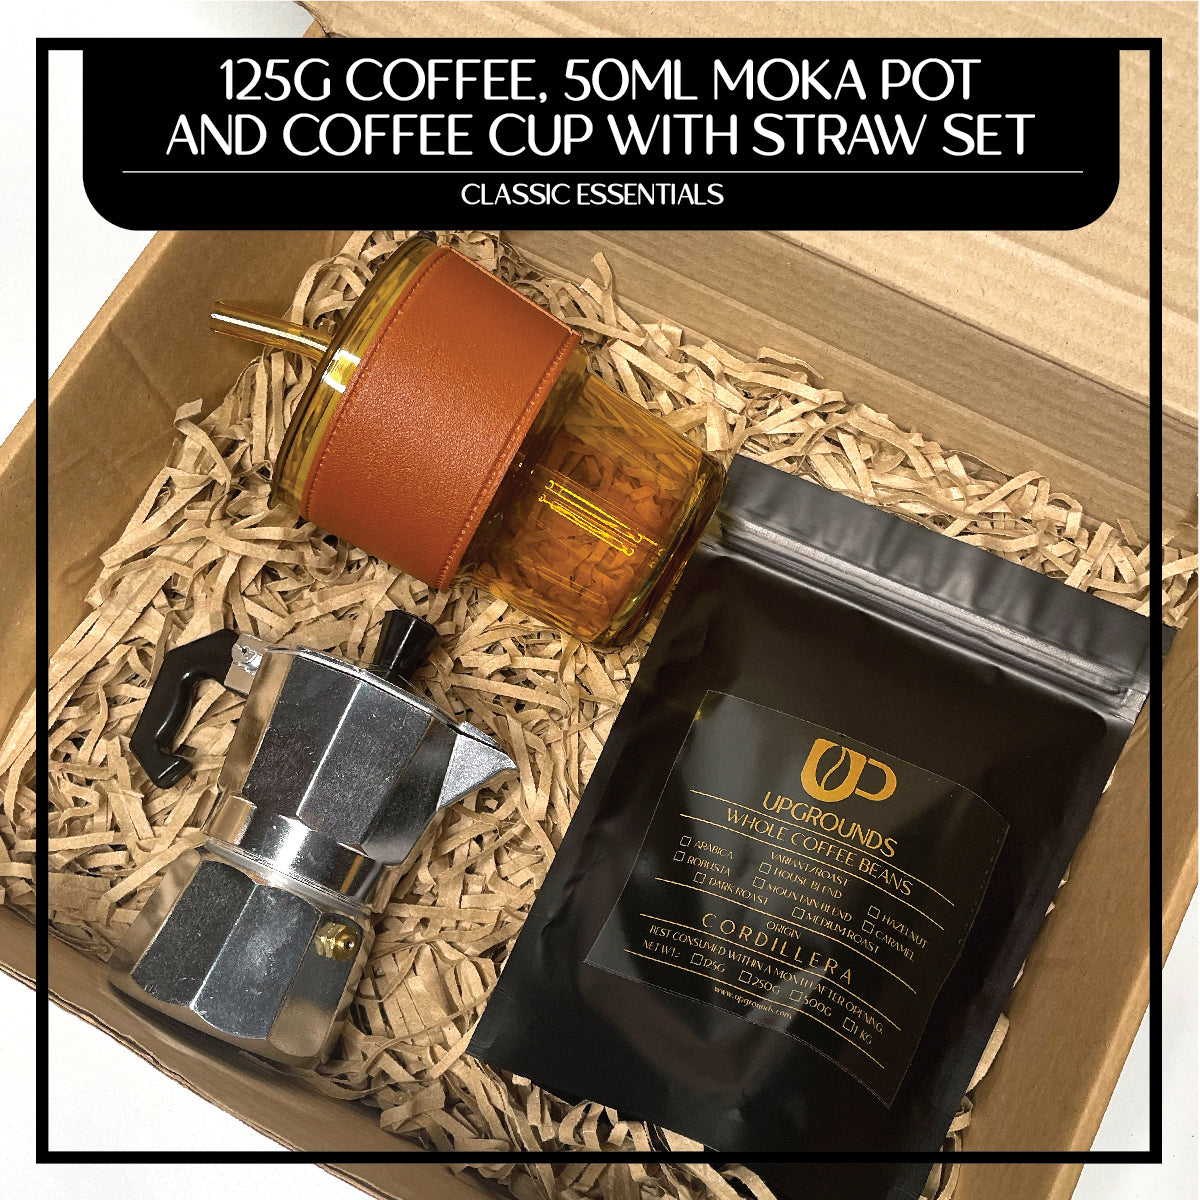 125g Coffee, 50ml Moka Pot and 450ml Coffee Cup with Straw Set | Upgrounds